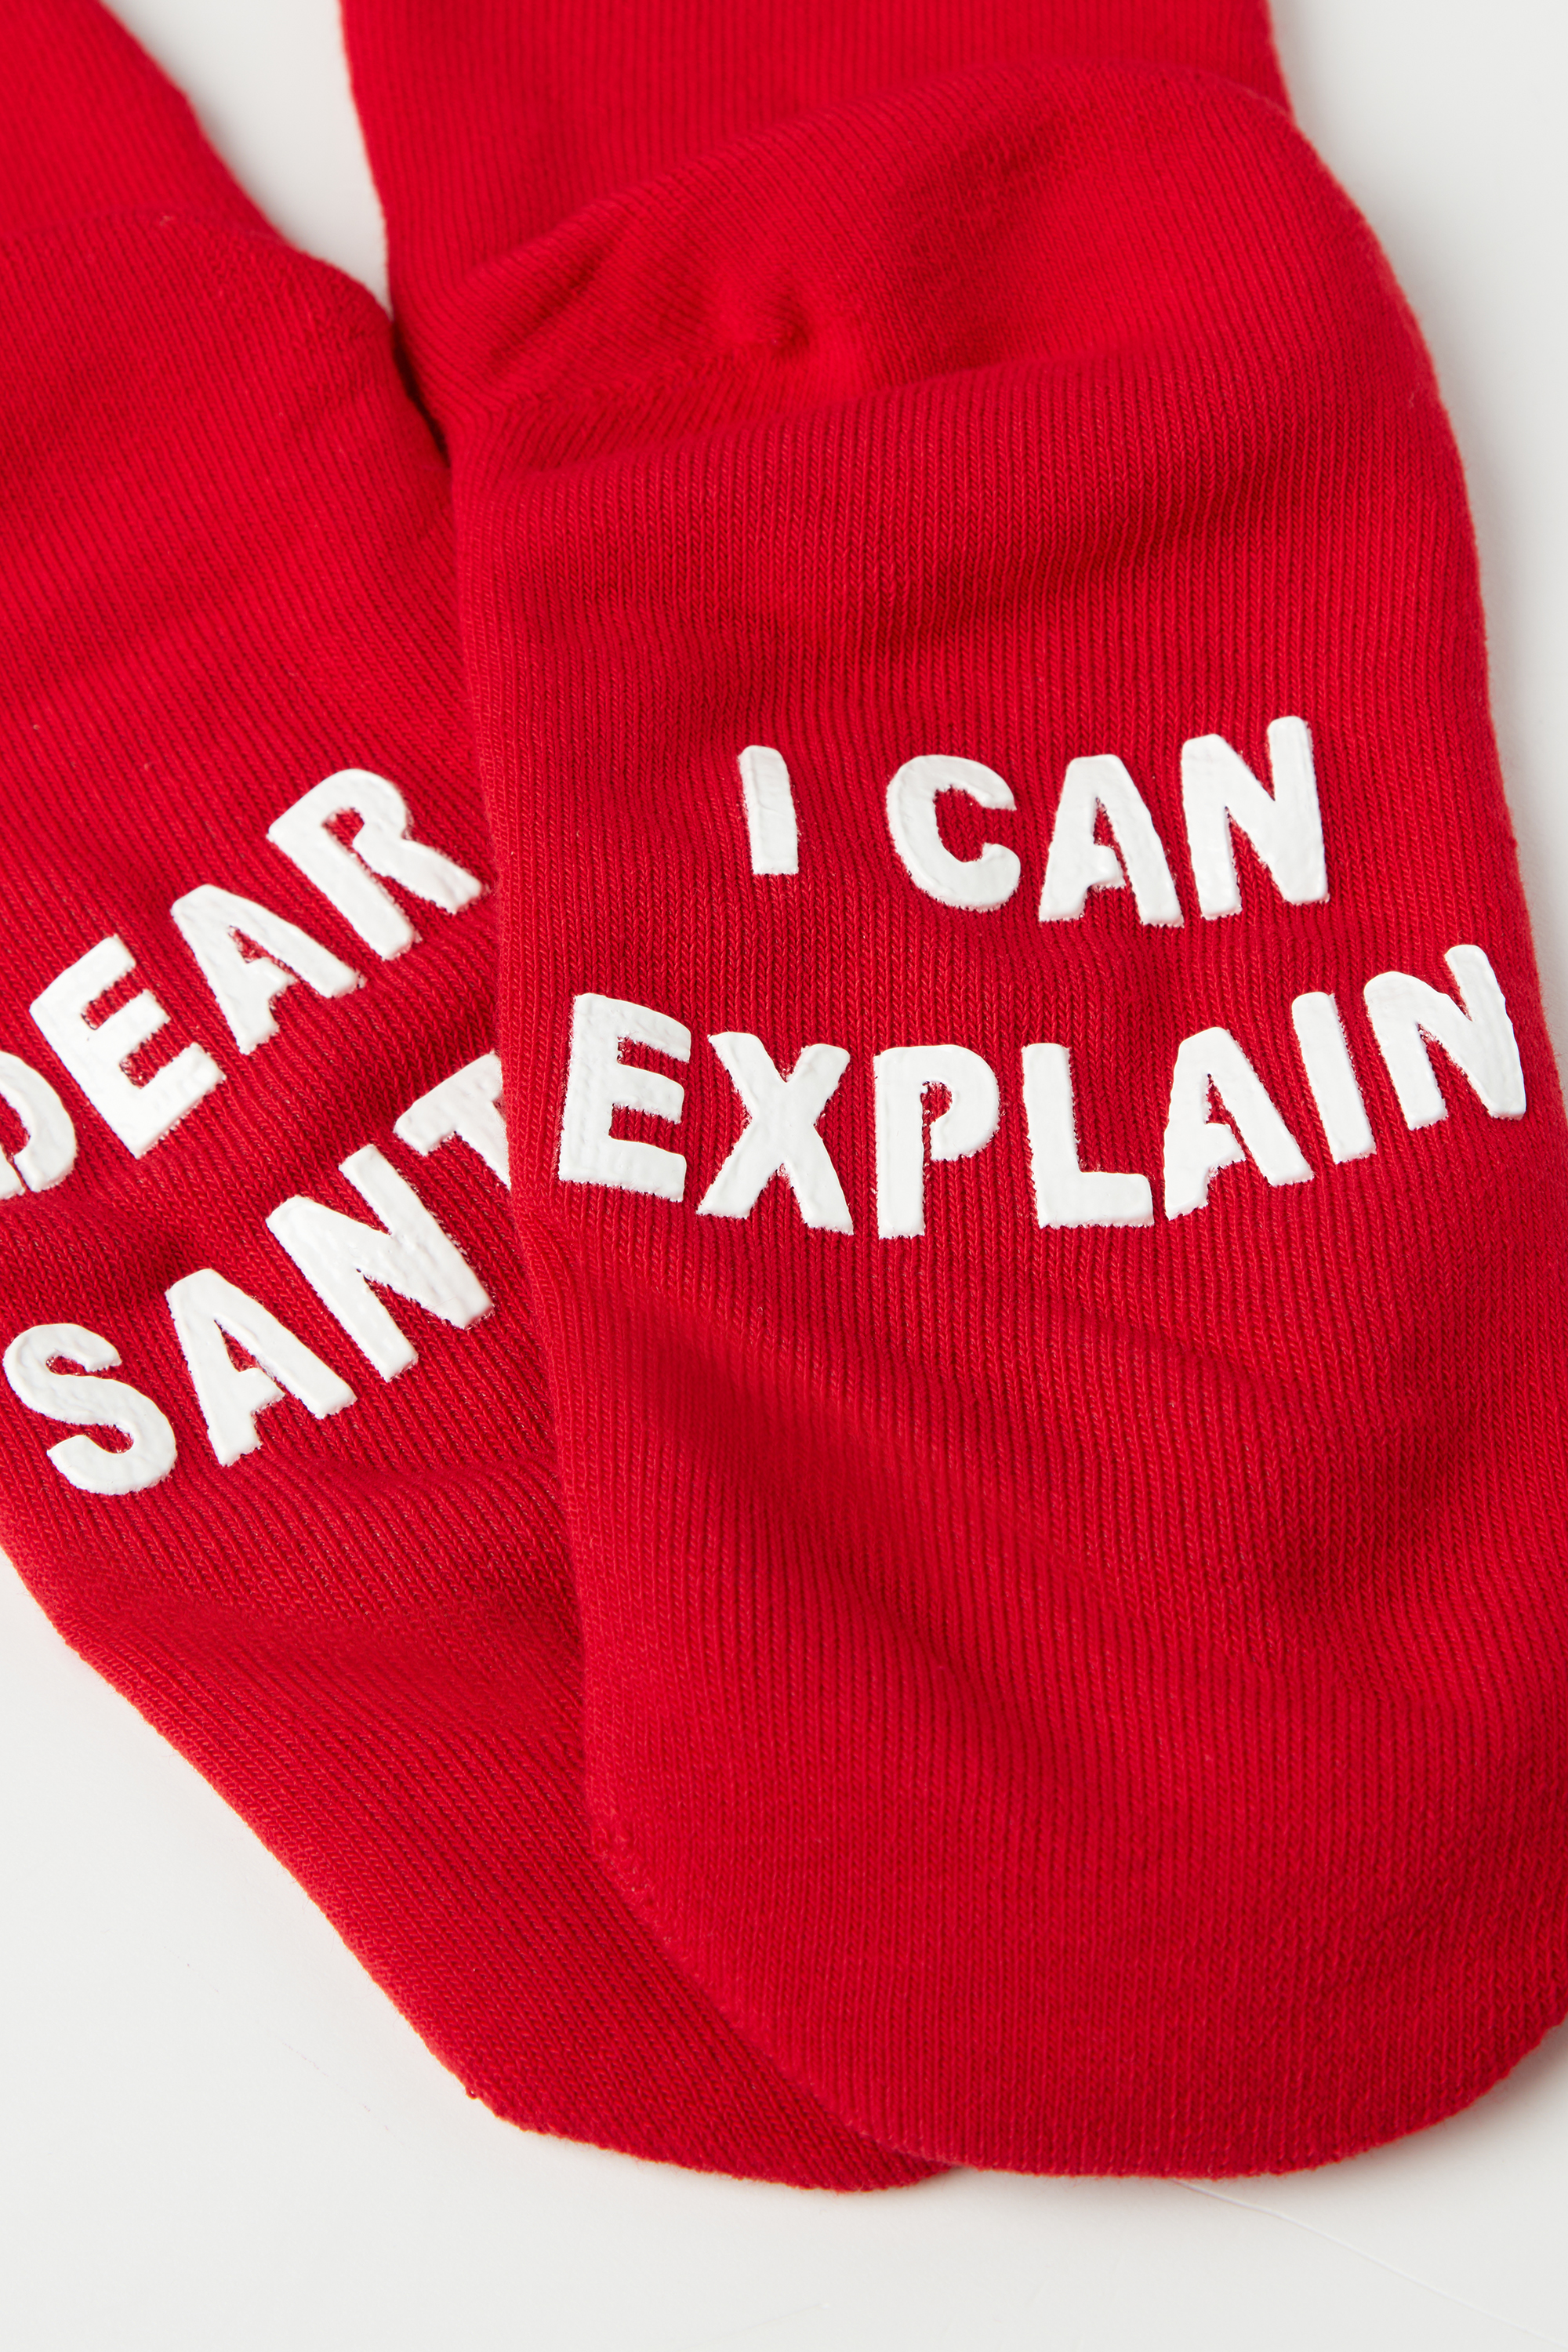 Men’s Short Non-Slip “Dear Santa” Christmas Print Socks